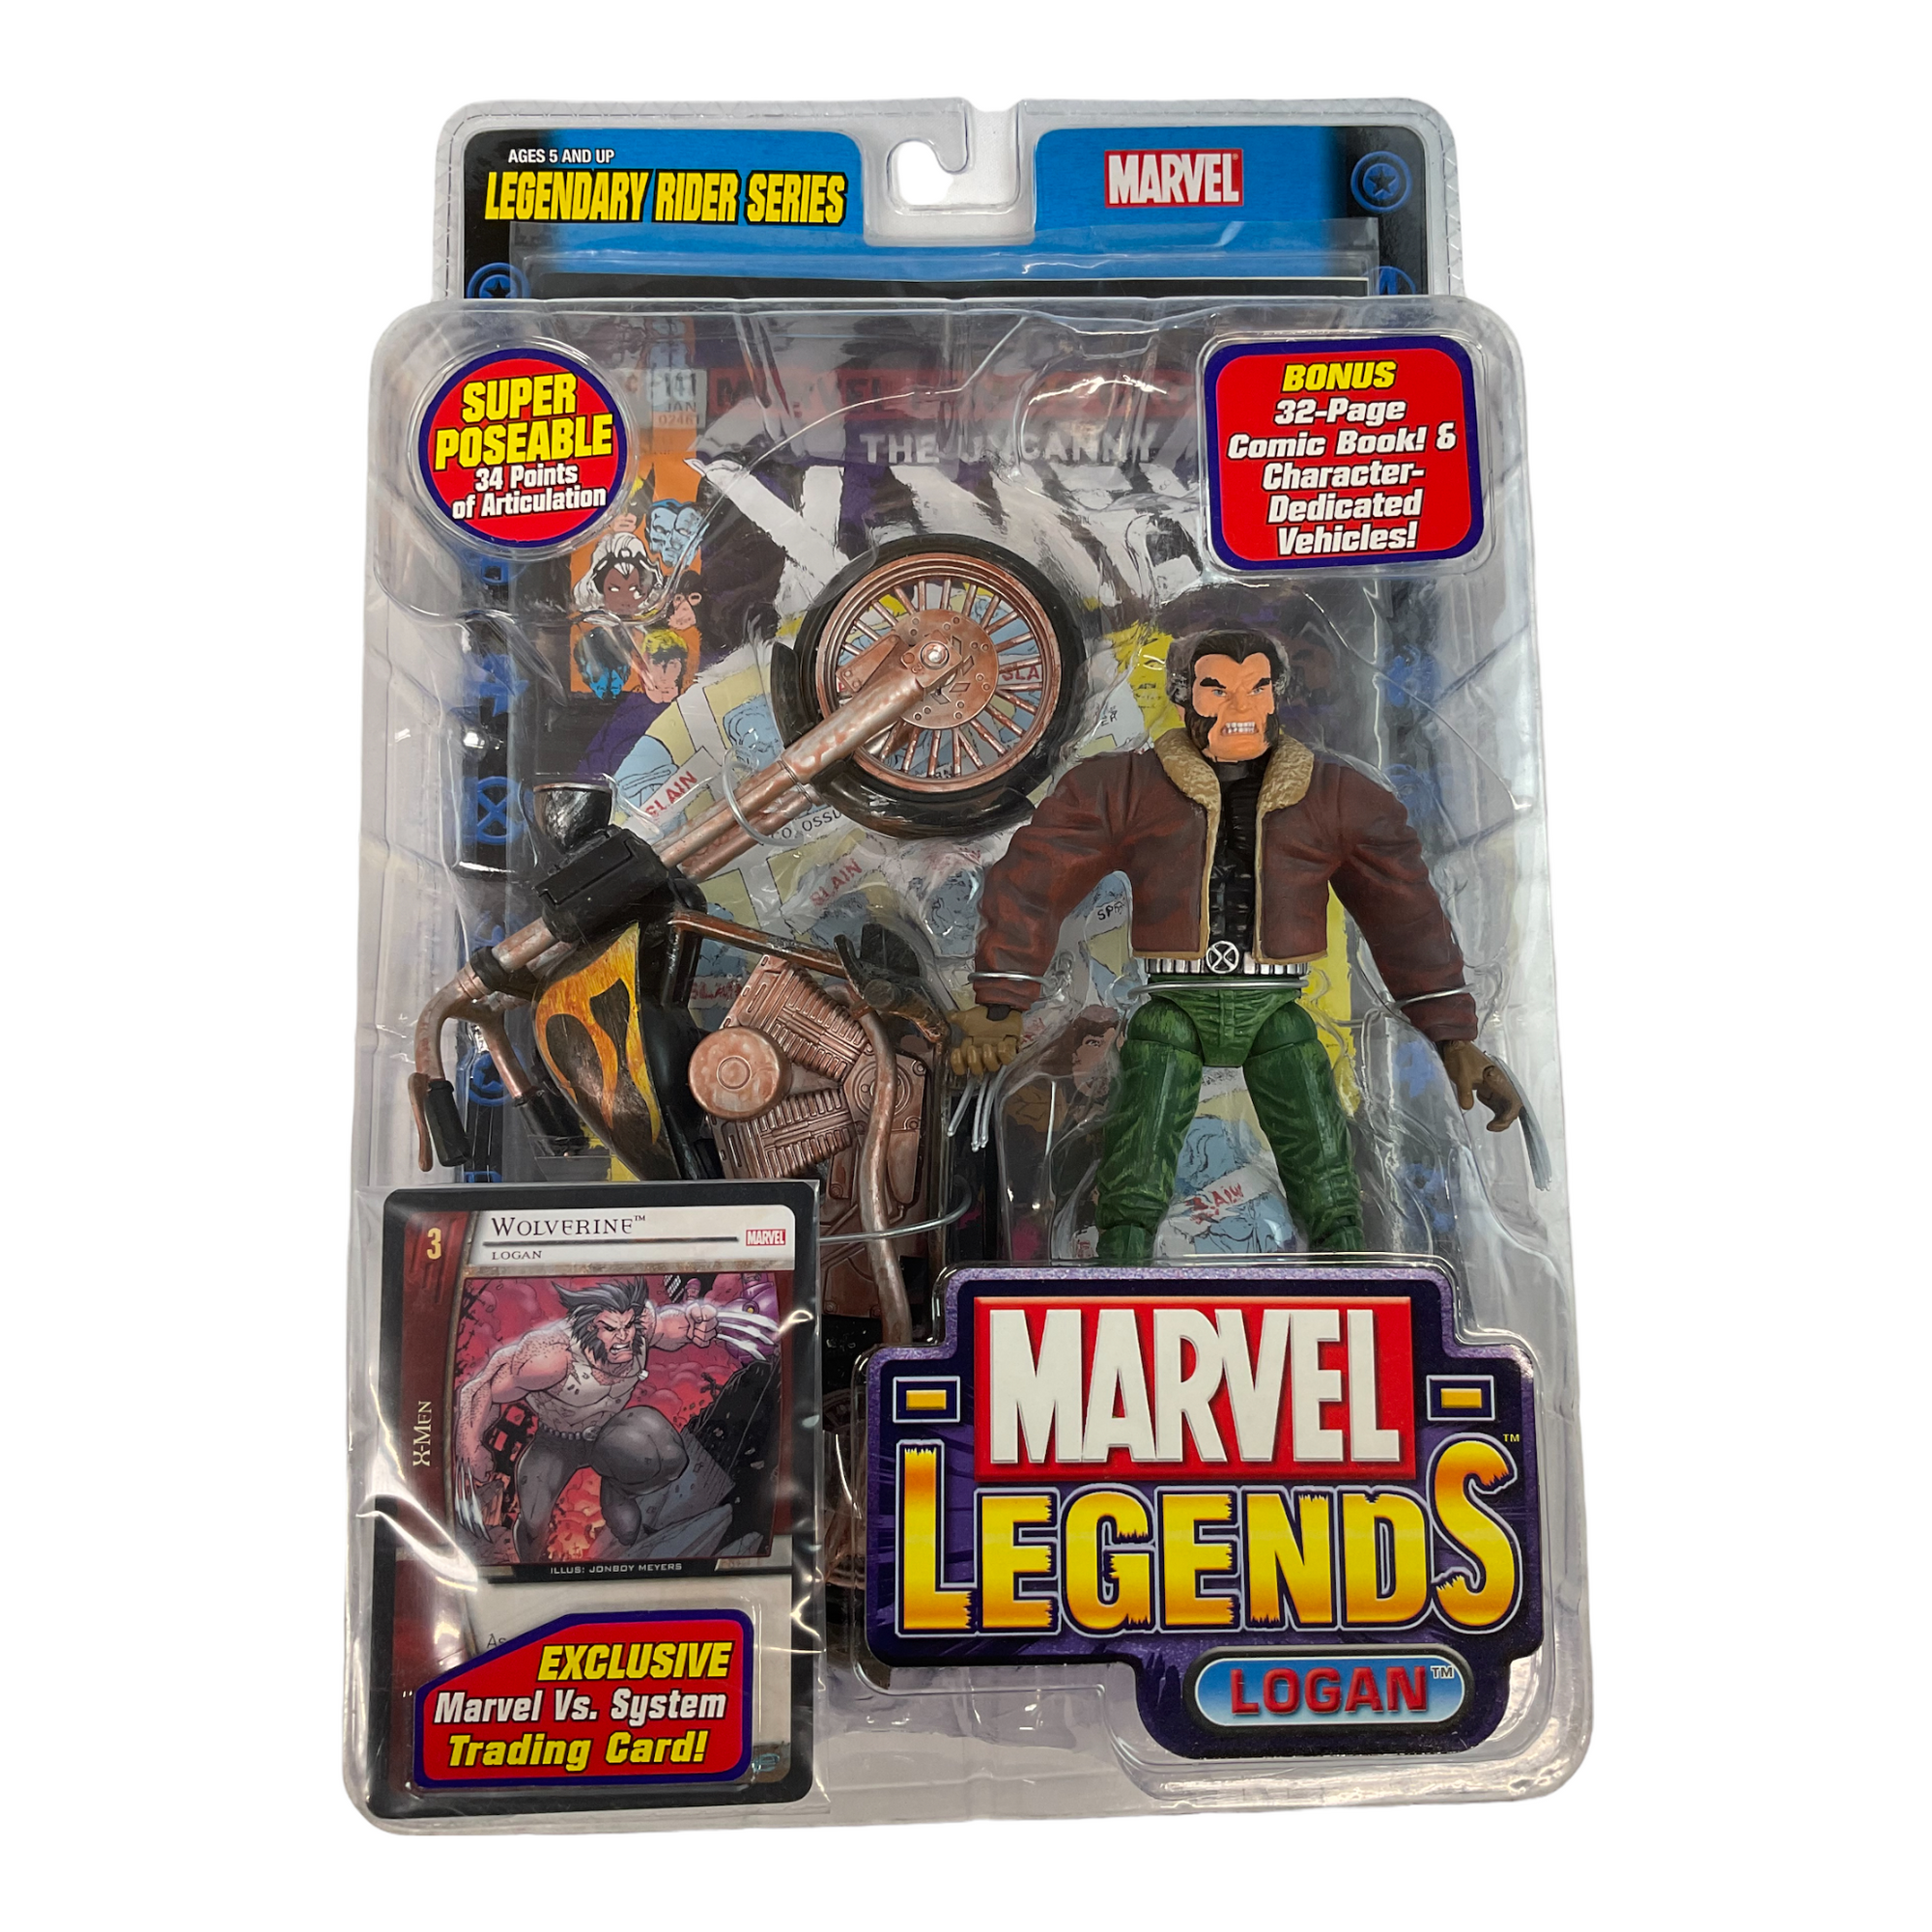 Marvel Legends - Legendary Riders Figure: Logan (Brown Jack with Green Pants)